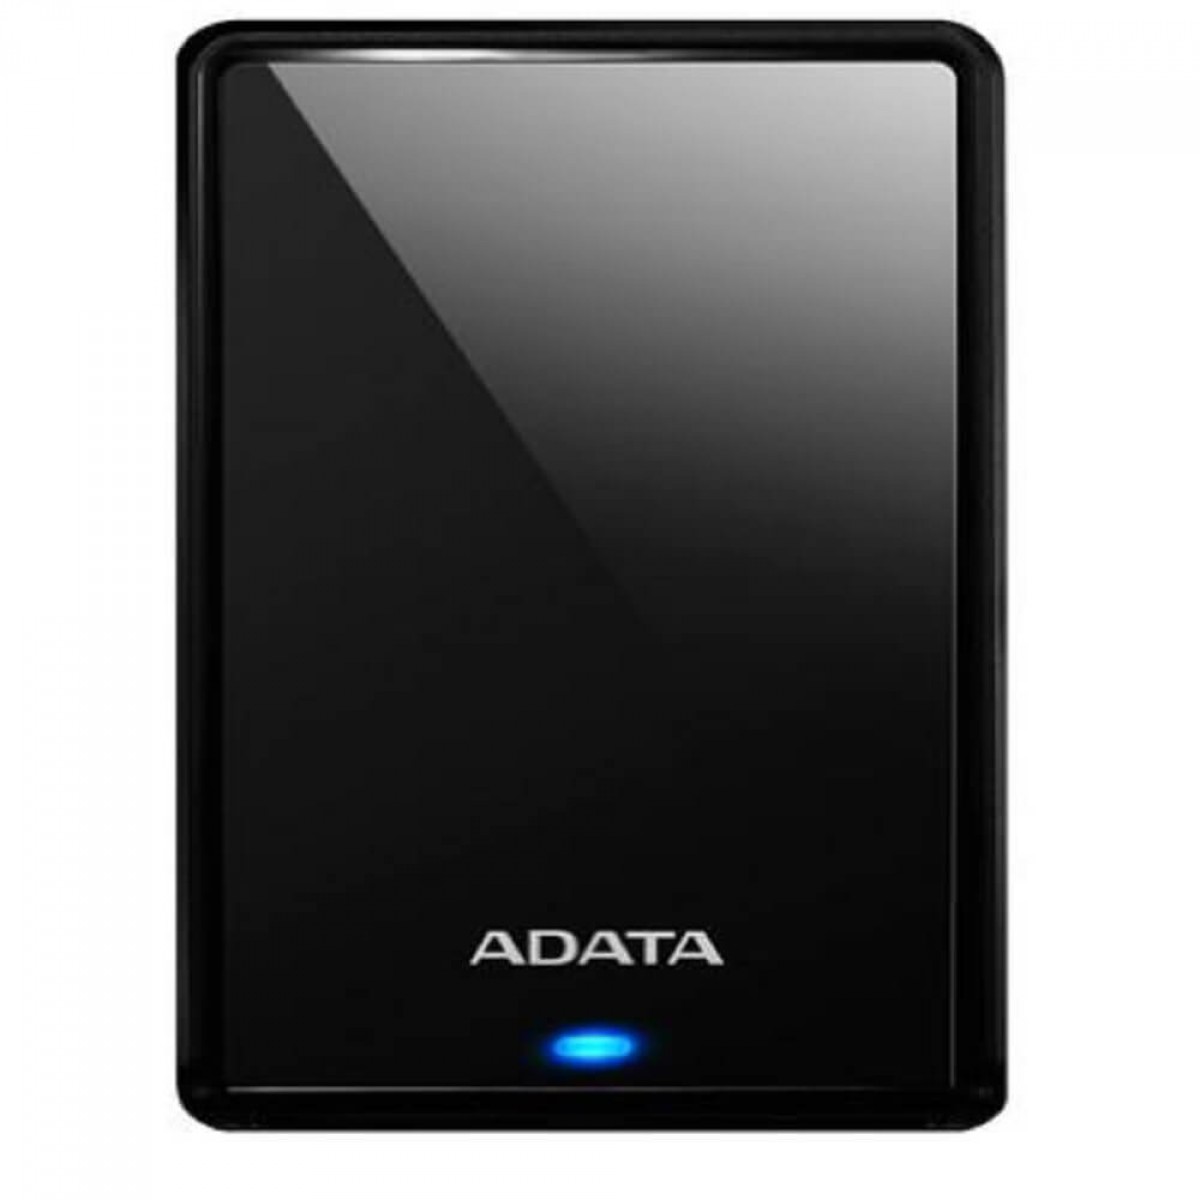 HD Externo Portátil Adata HV620S 4TB, USB 3.2, Black , AHV620S-4TU31-CBK